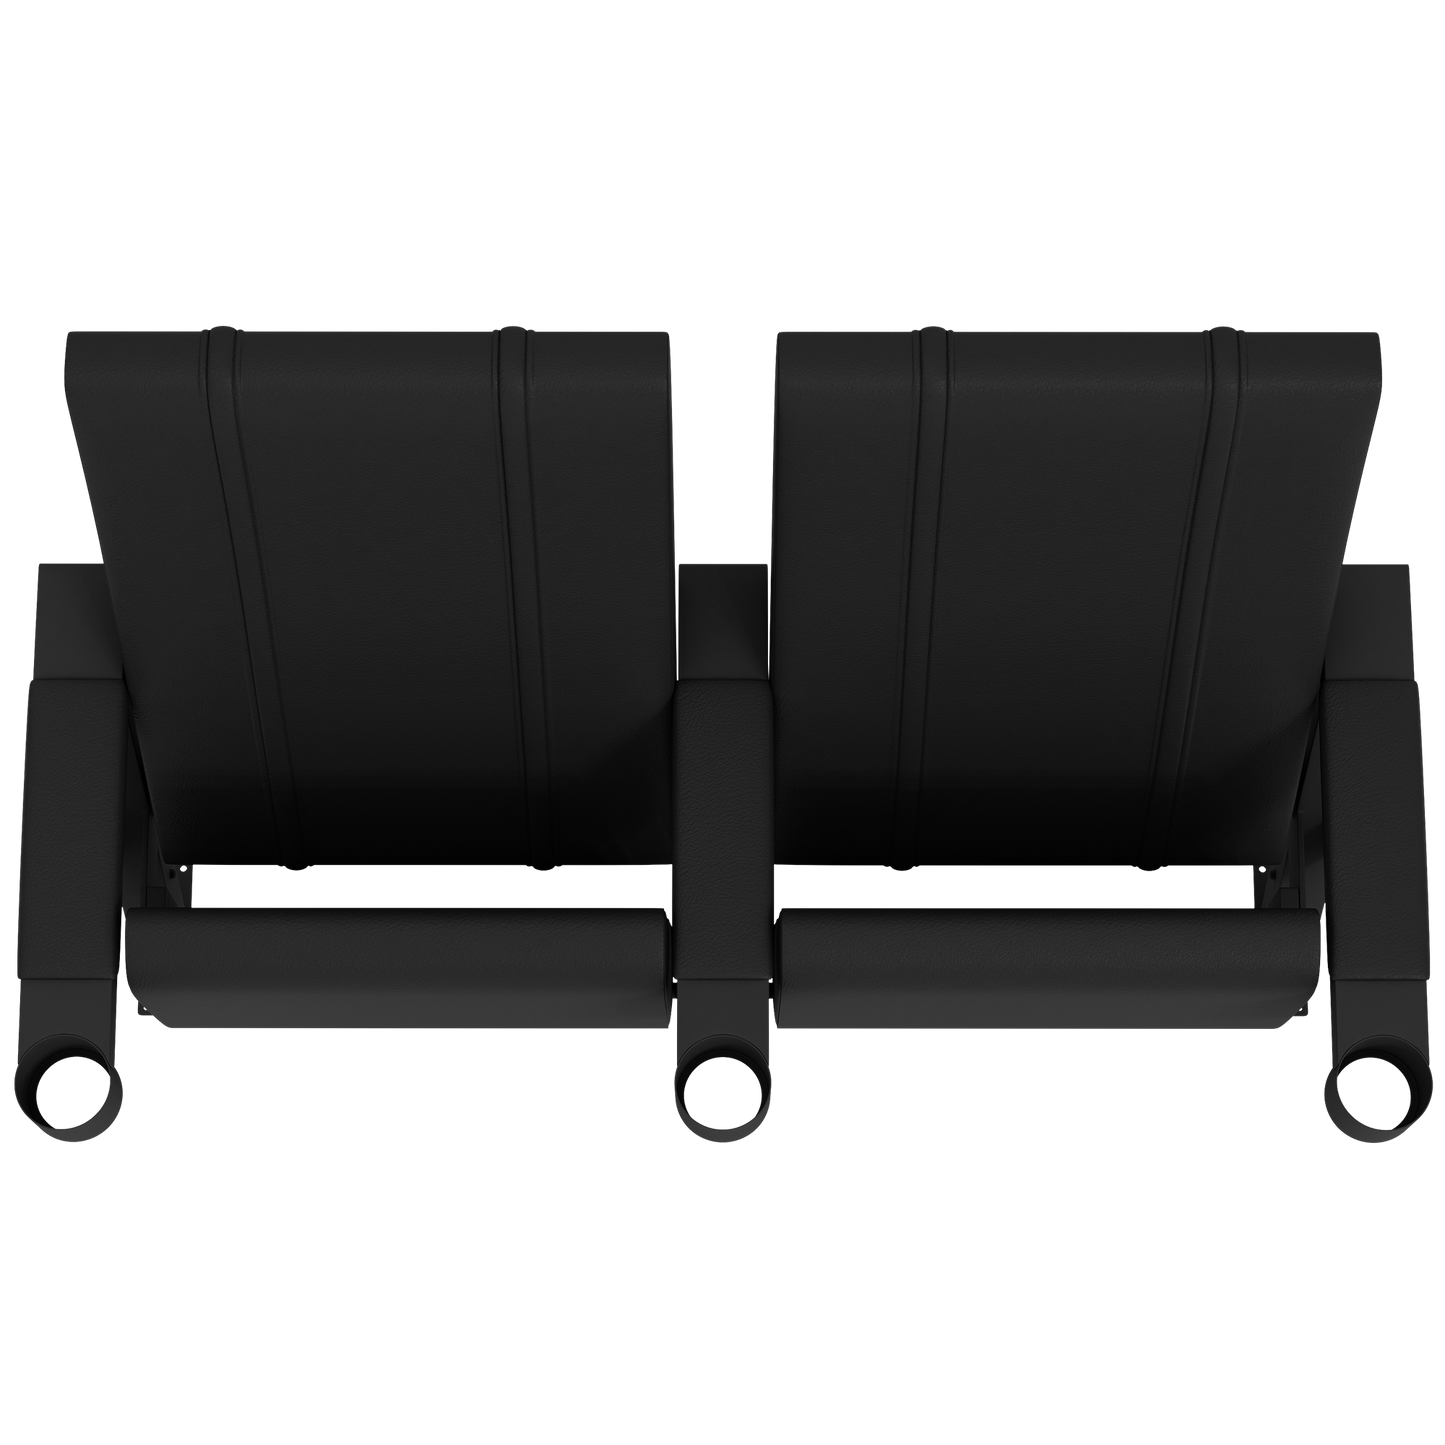 SuiteMax 3.5 VIP Seats with Nashville SC Logo